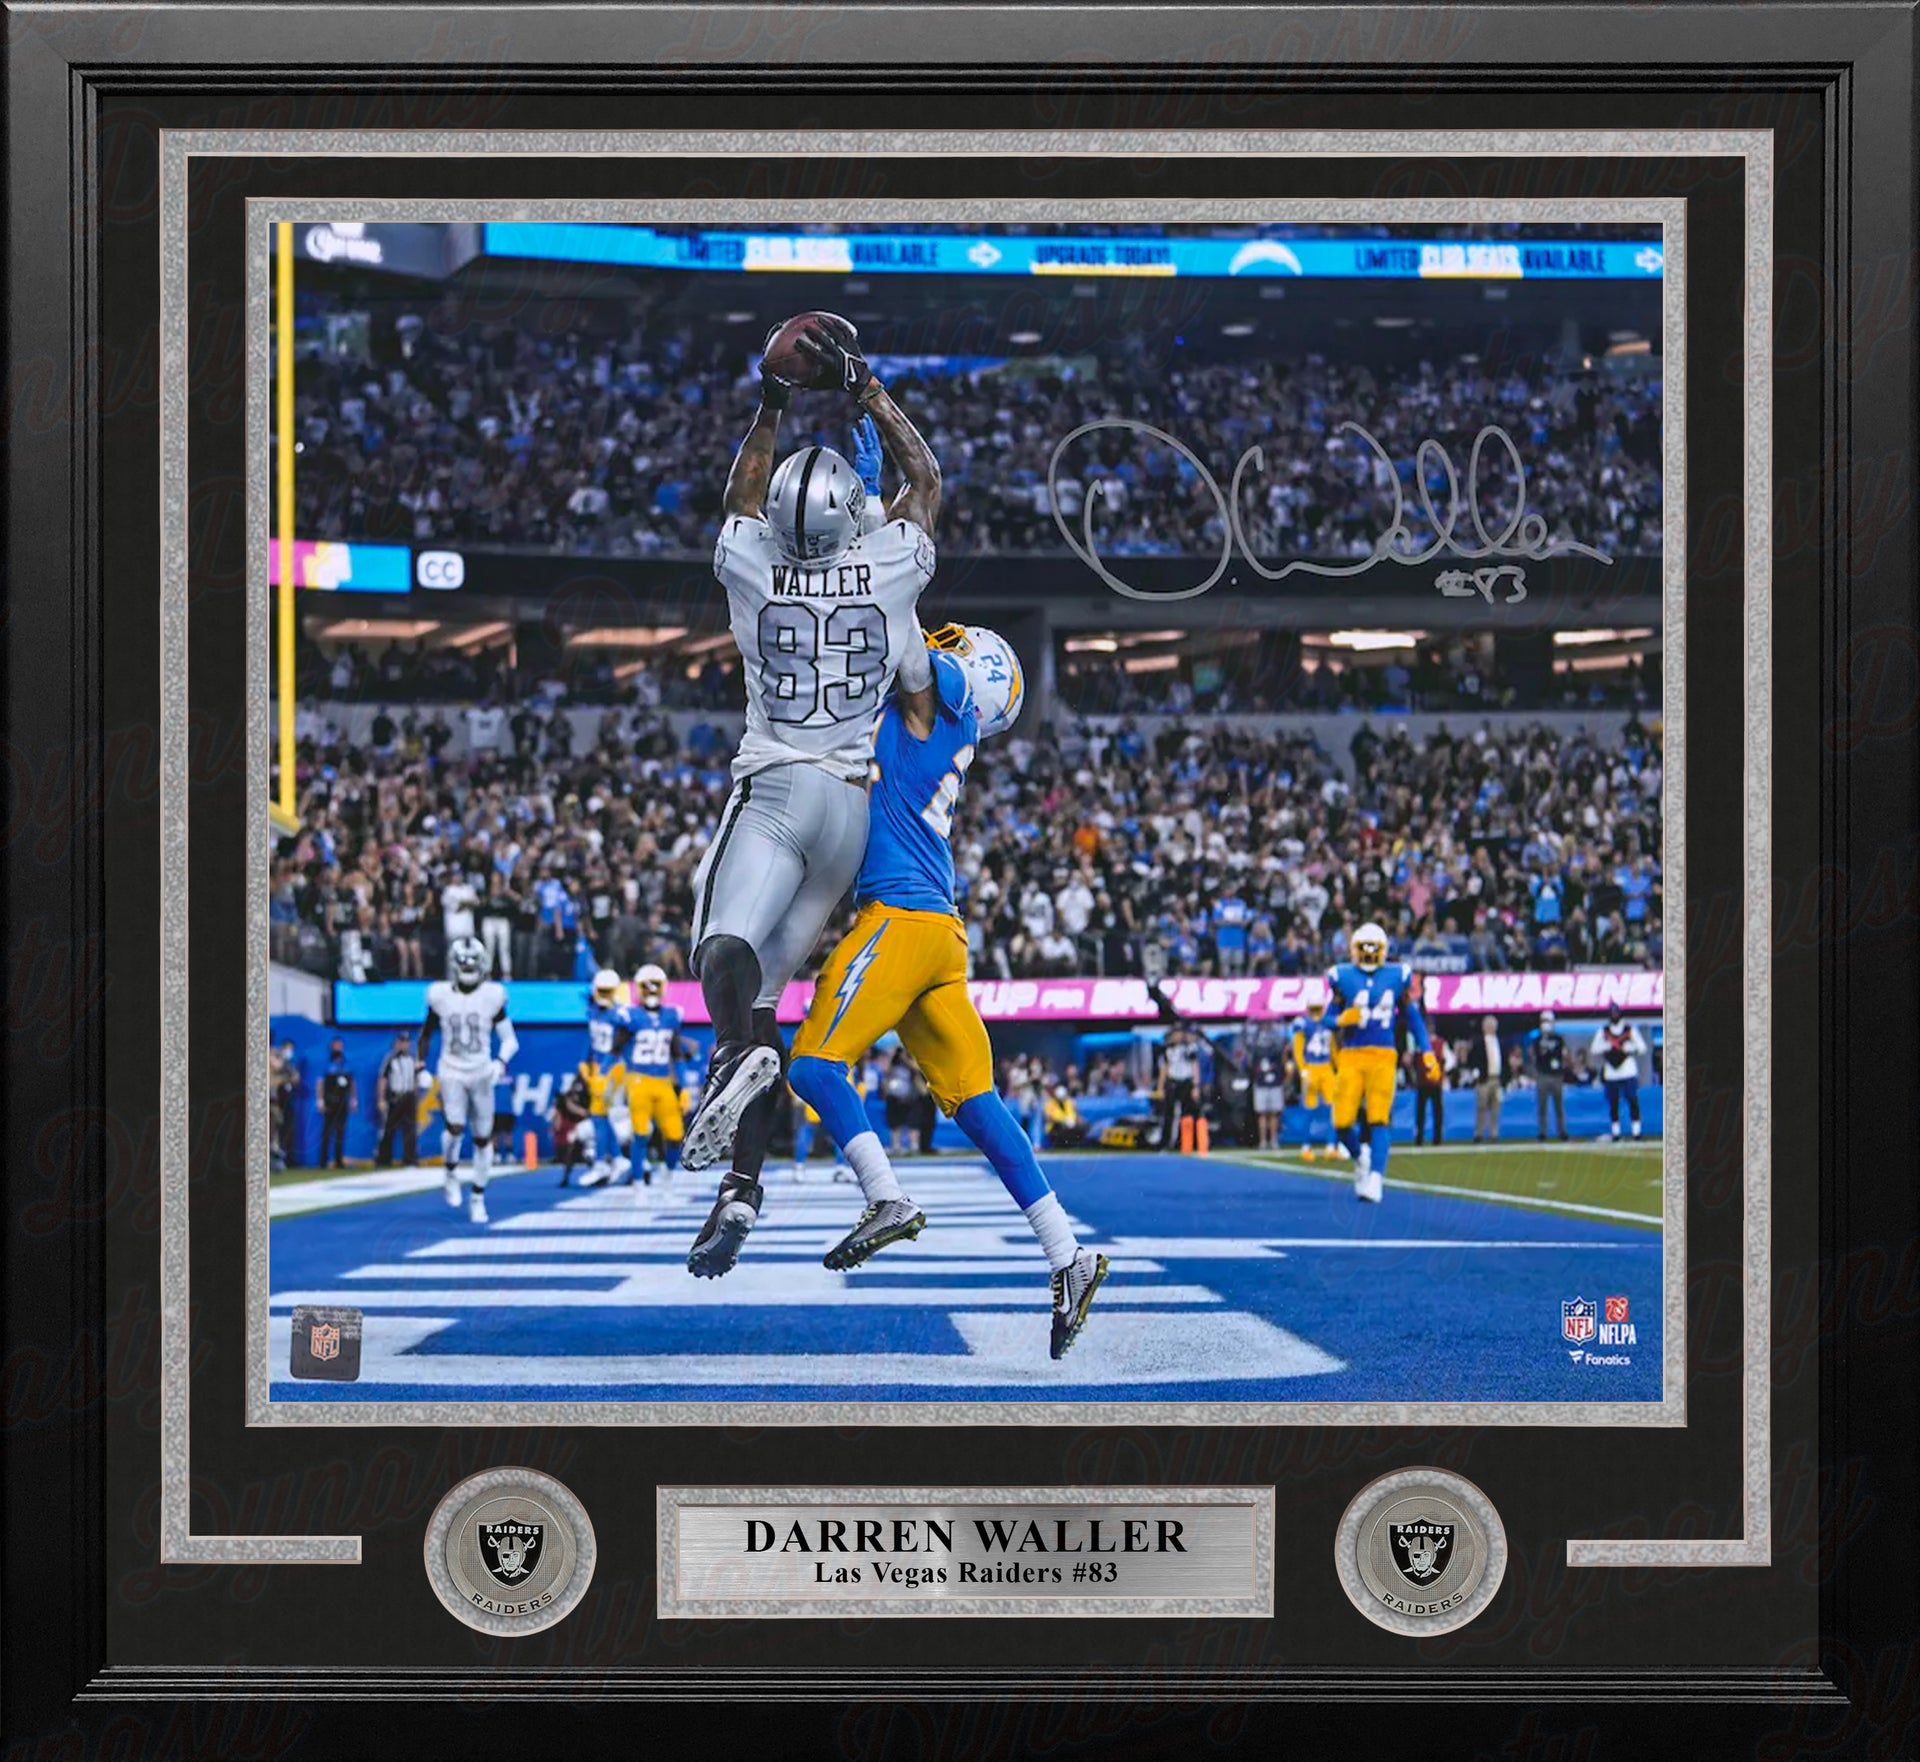 Darren Waller Touchdown Catch Las Vegas Raiders Autographed 16" x 20" Framed Football Photo - Dynasty Sports & Framing 